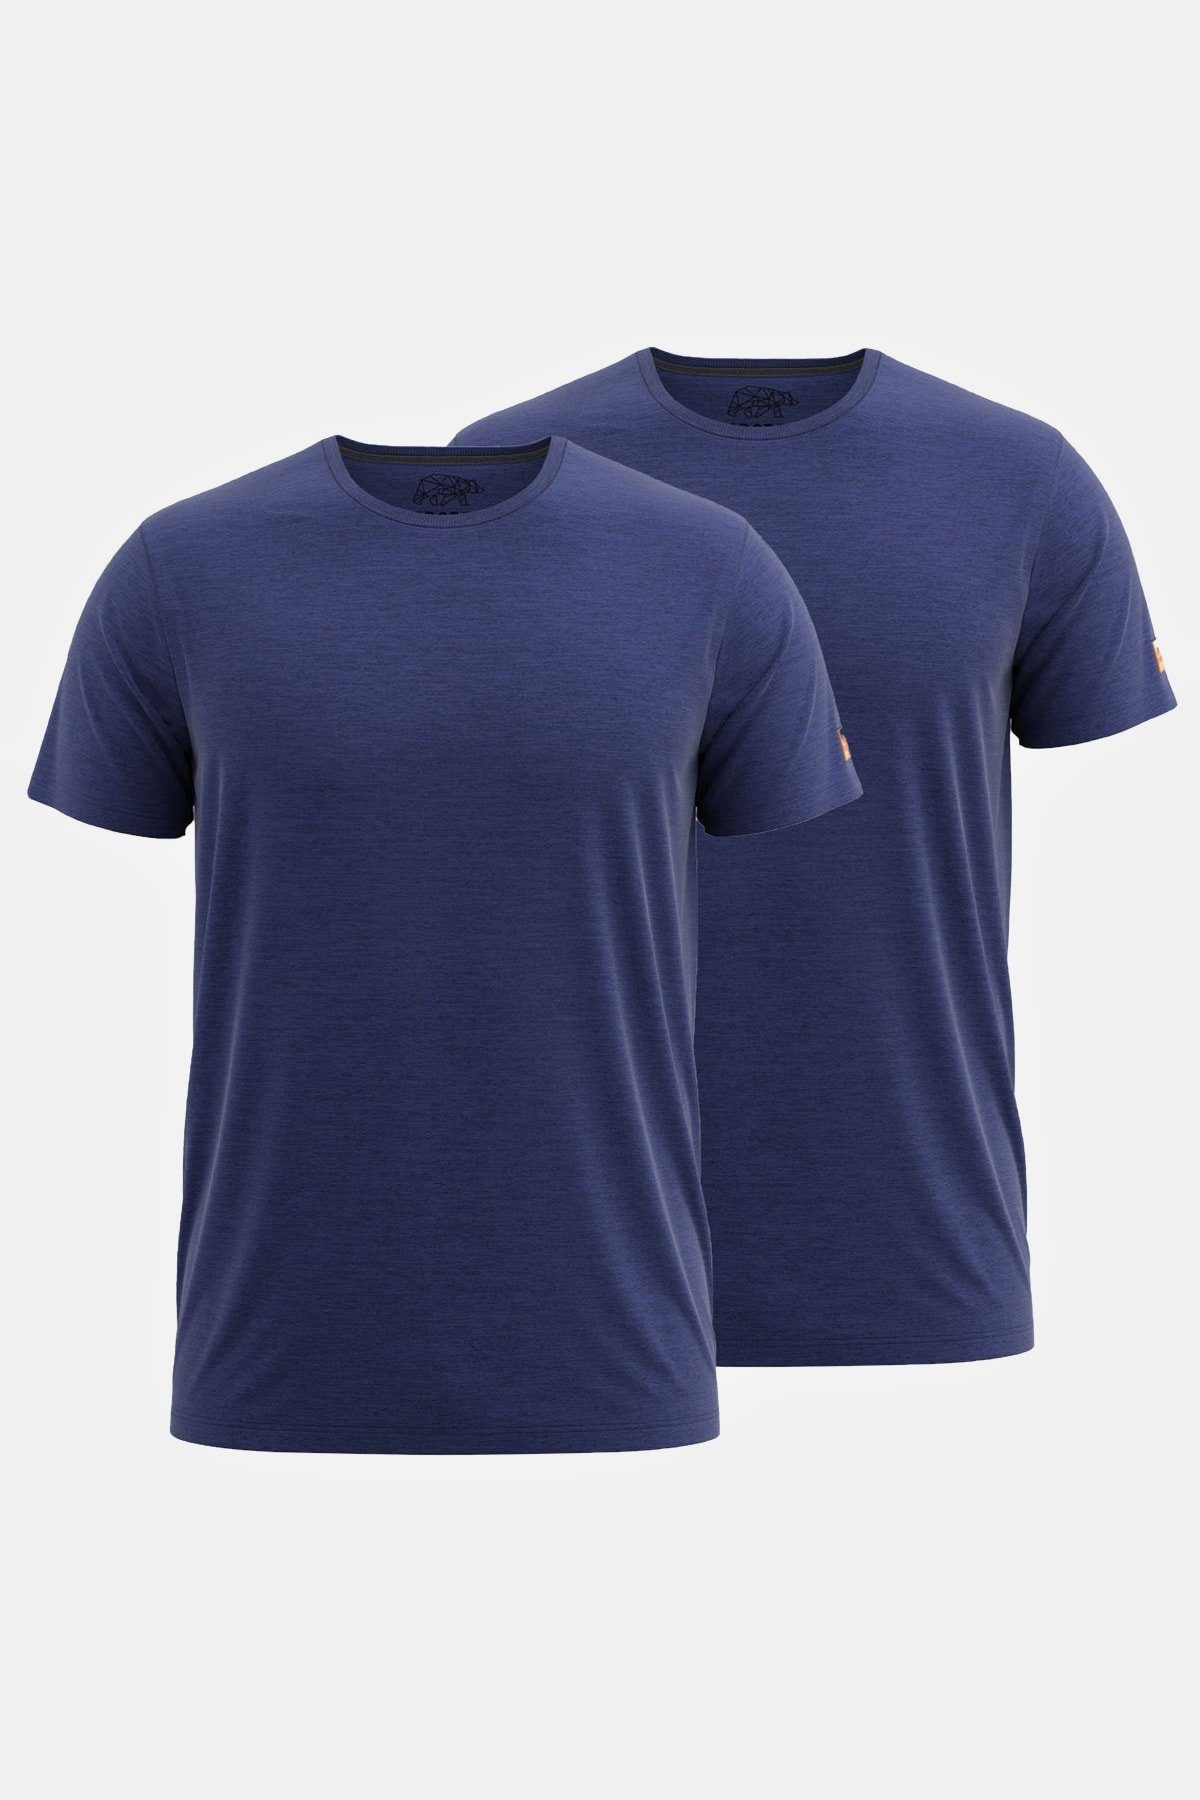 FORSBERG blau T-Shirt T-Shirt Doppelpack 1/2